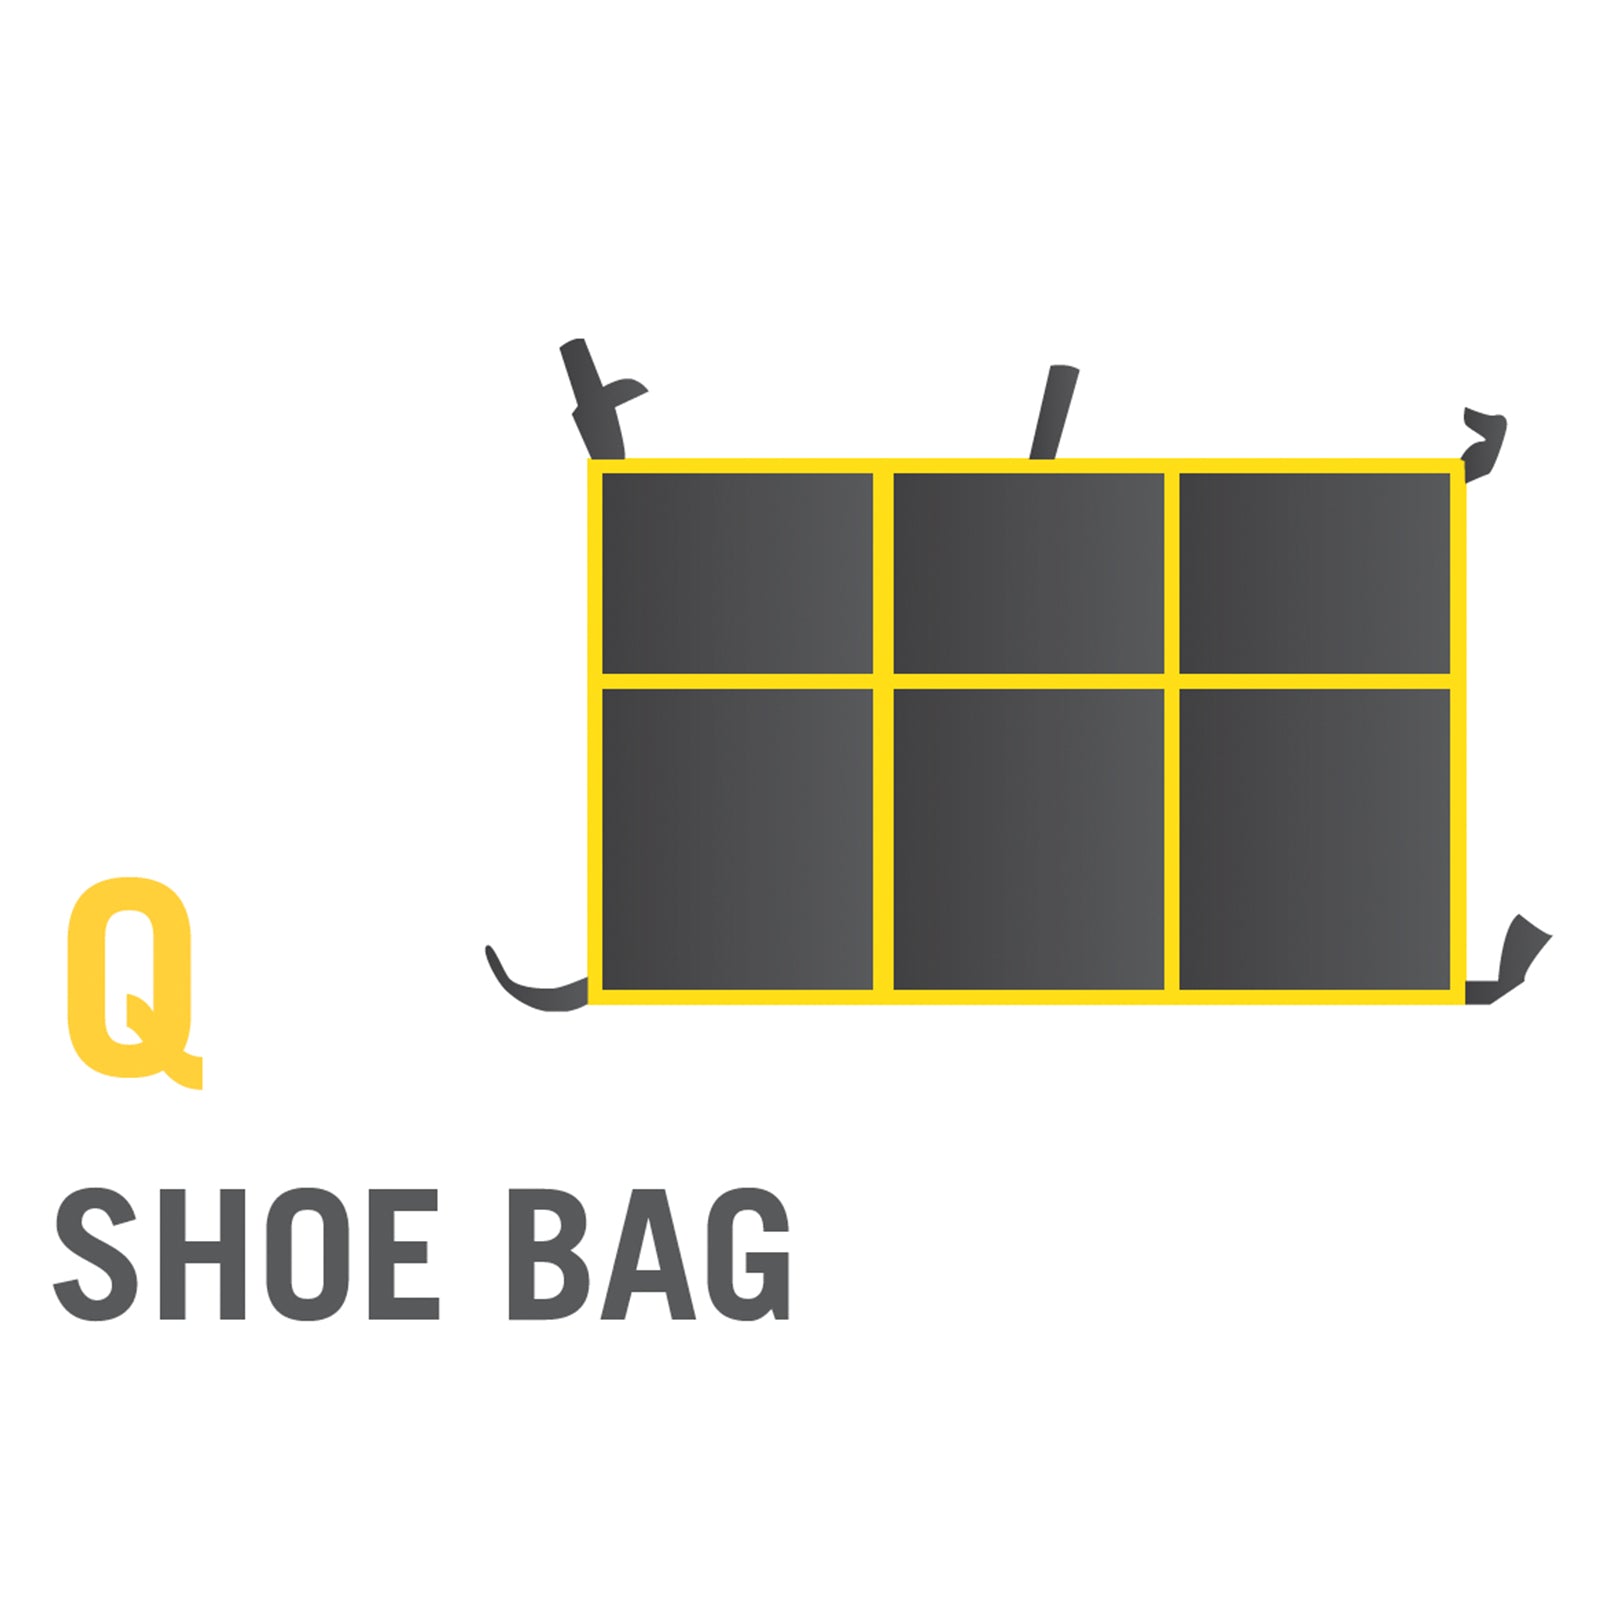 Shoe Bag for Stratos Trampolines (Part Q).